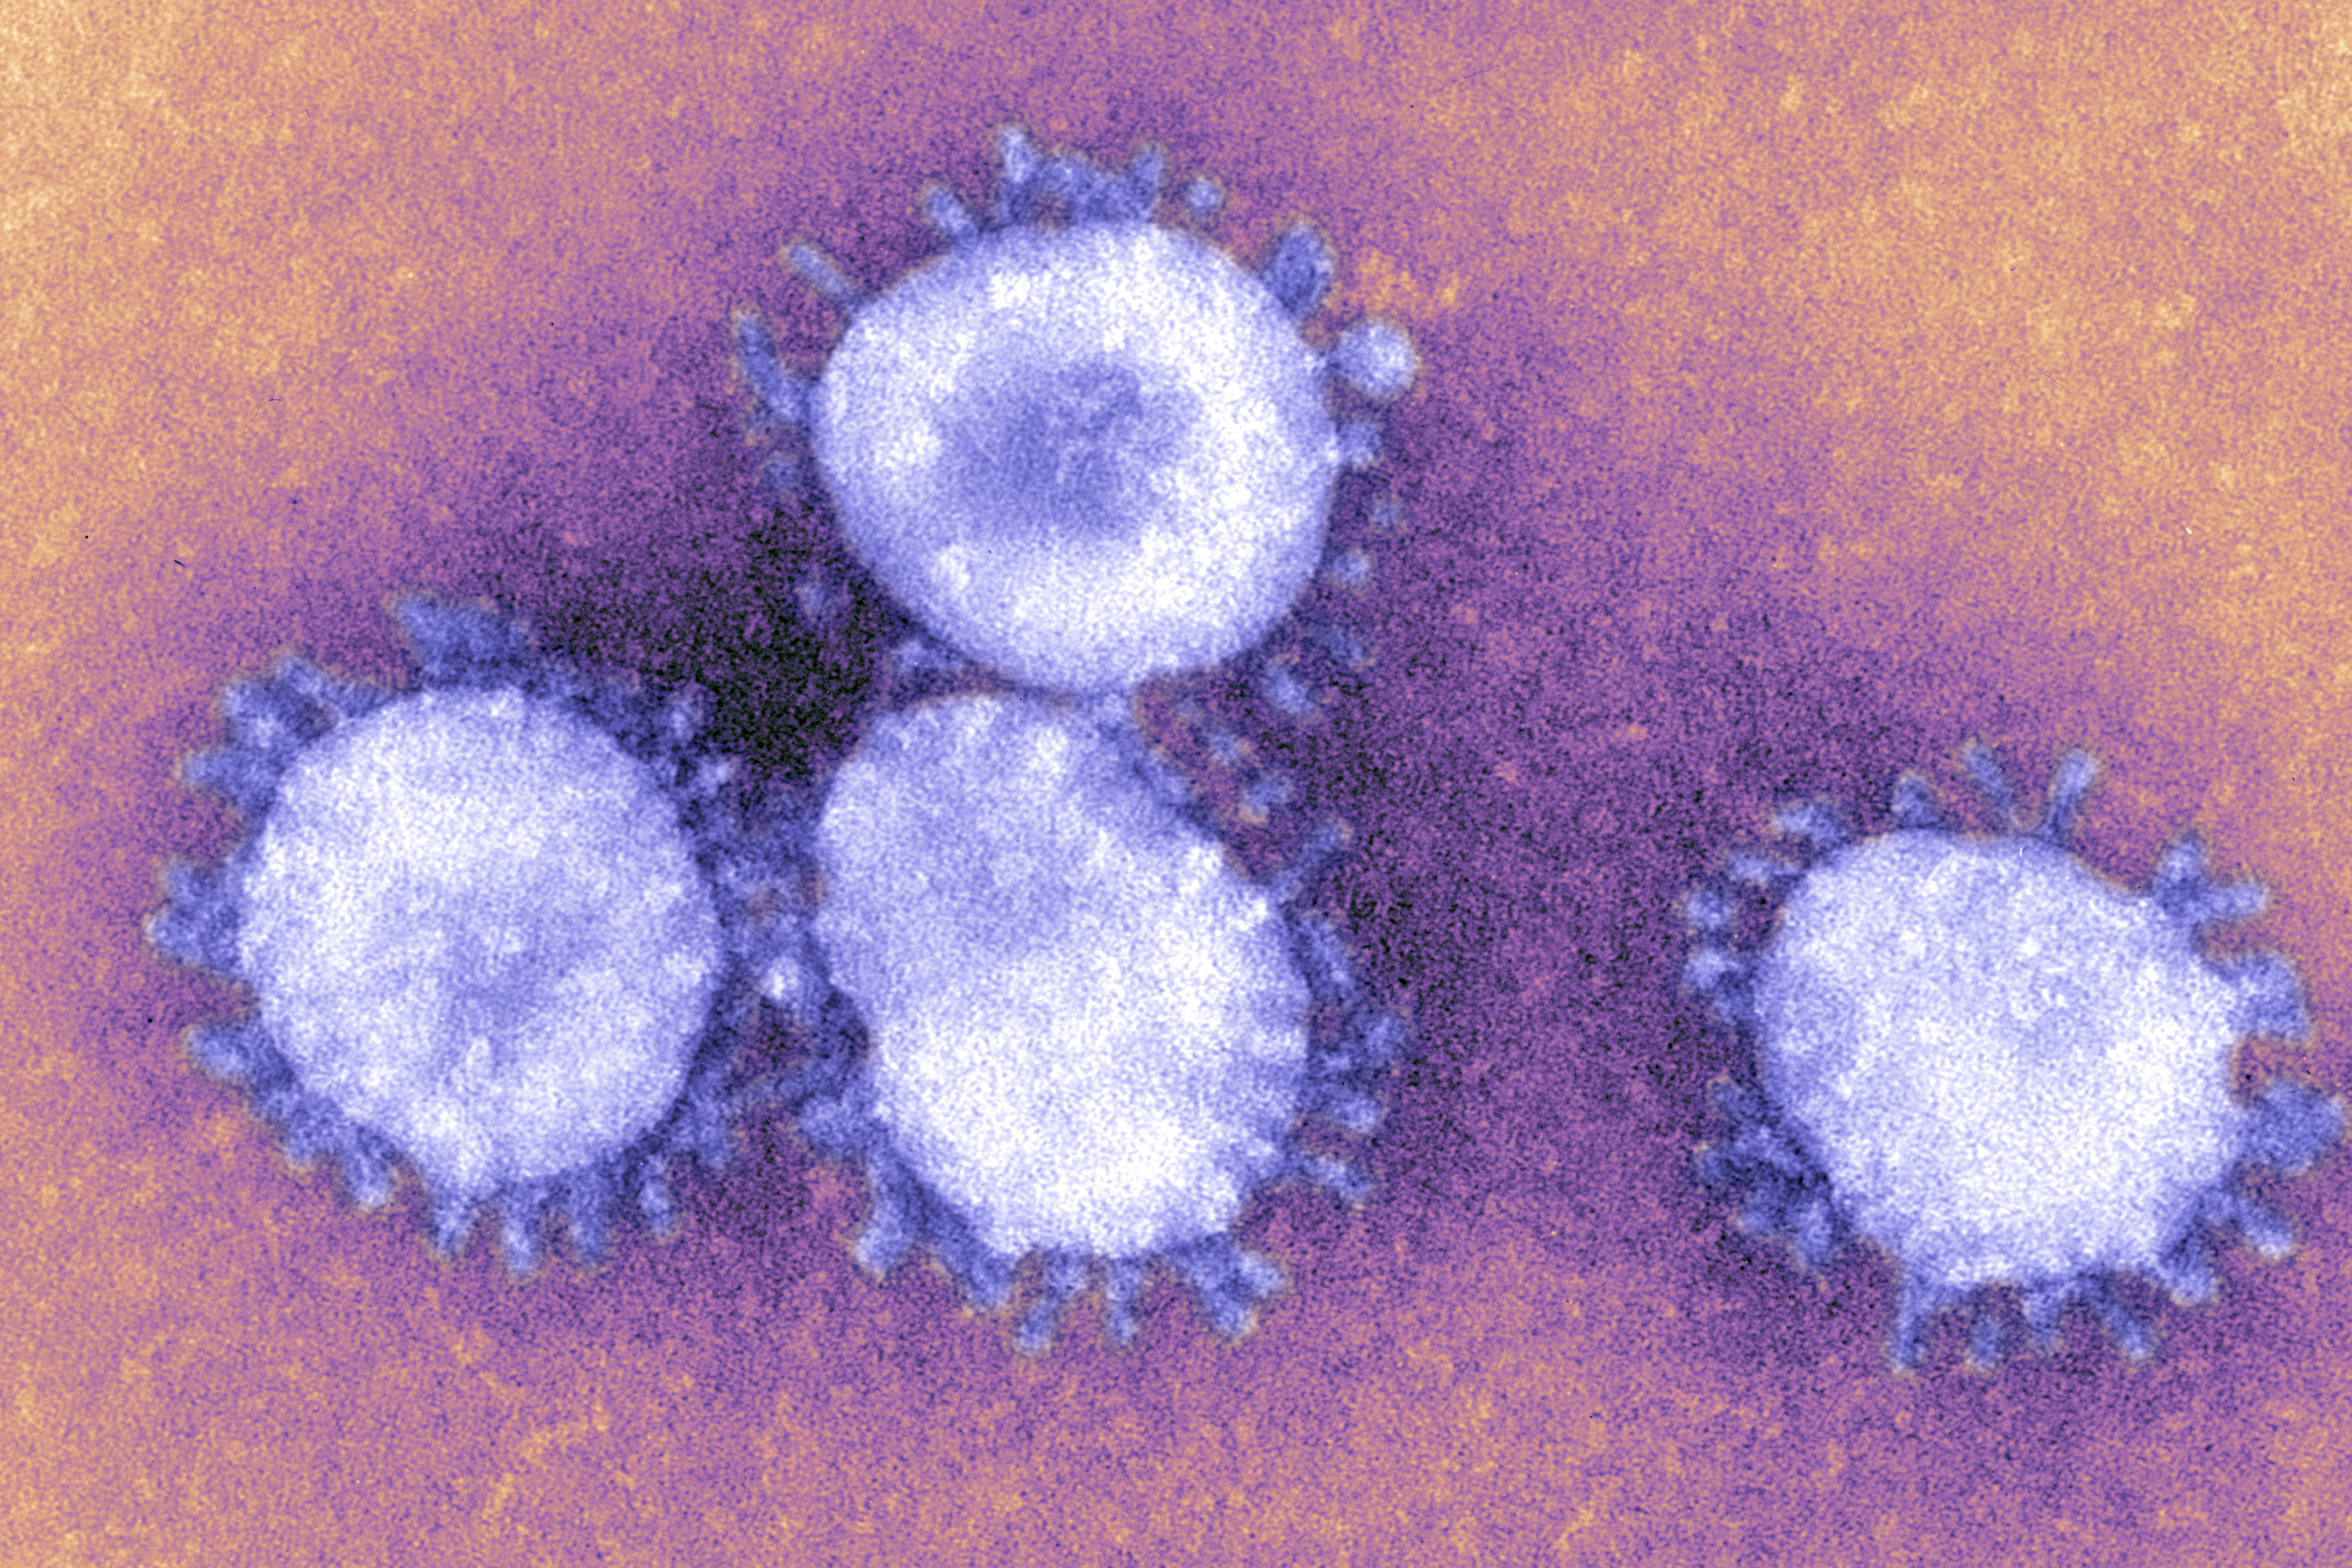 Ковид это вирус. Вирус коронавирус под микроскопом. Коронавирус 2019 под микроскопом. Микрофотография вируса коронавирус. Human coronavirus 229e.